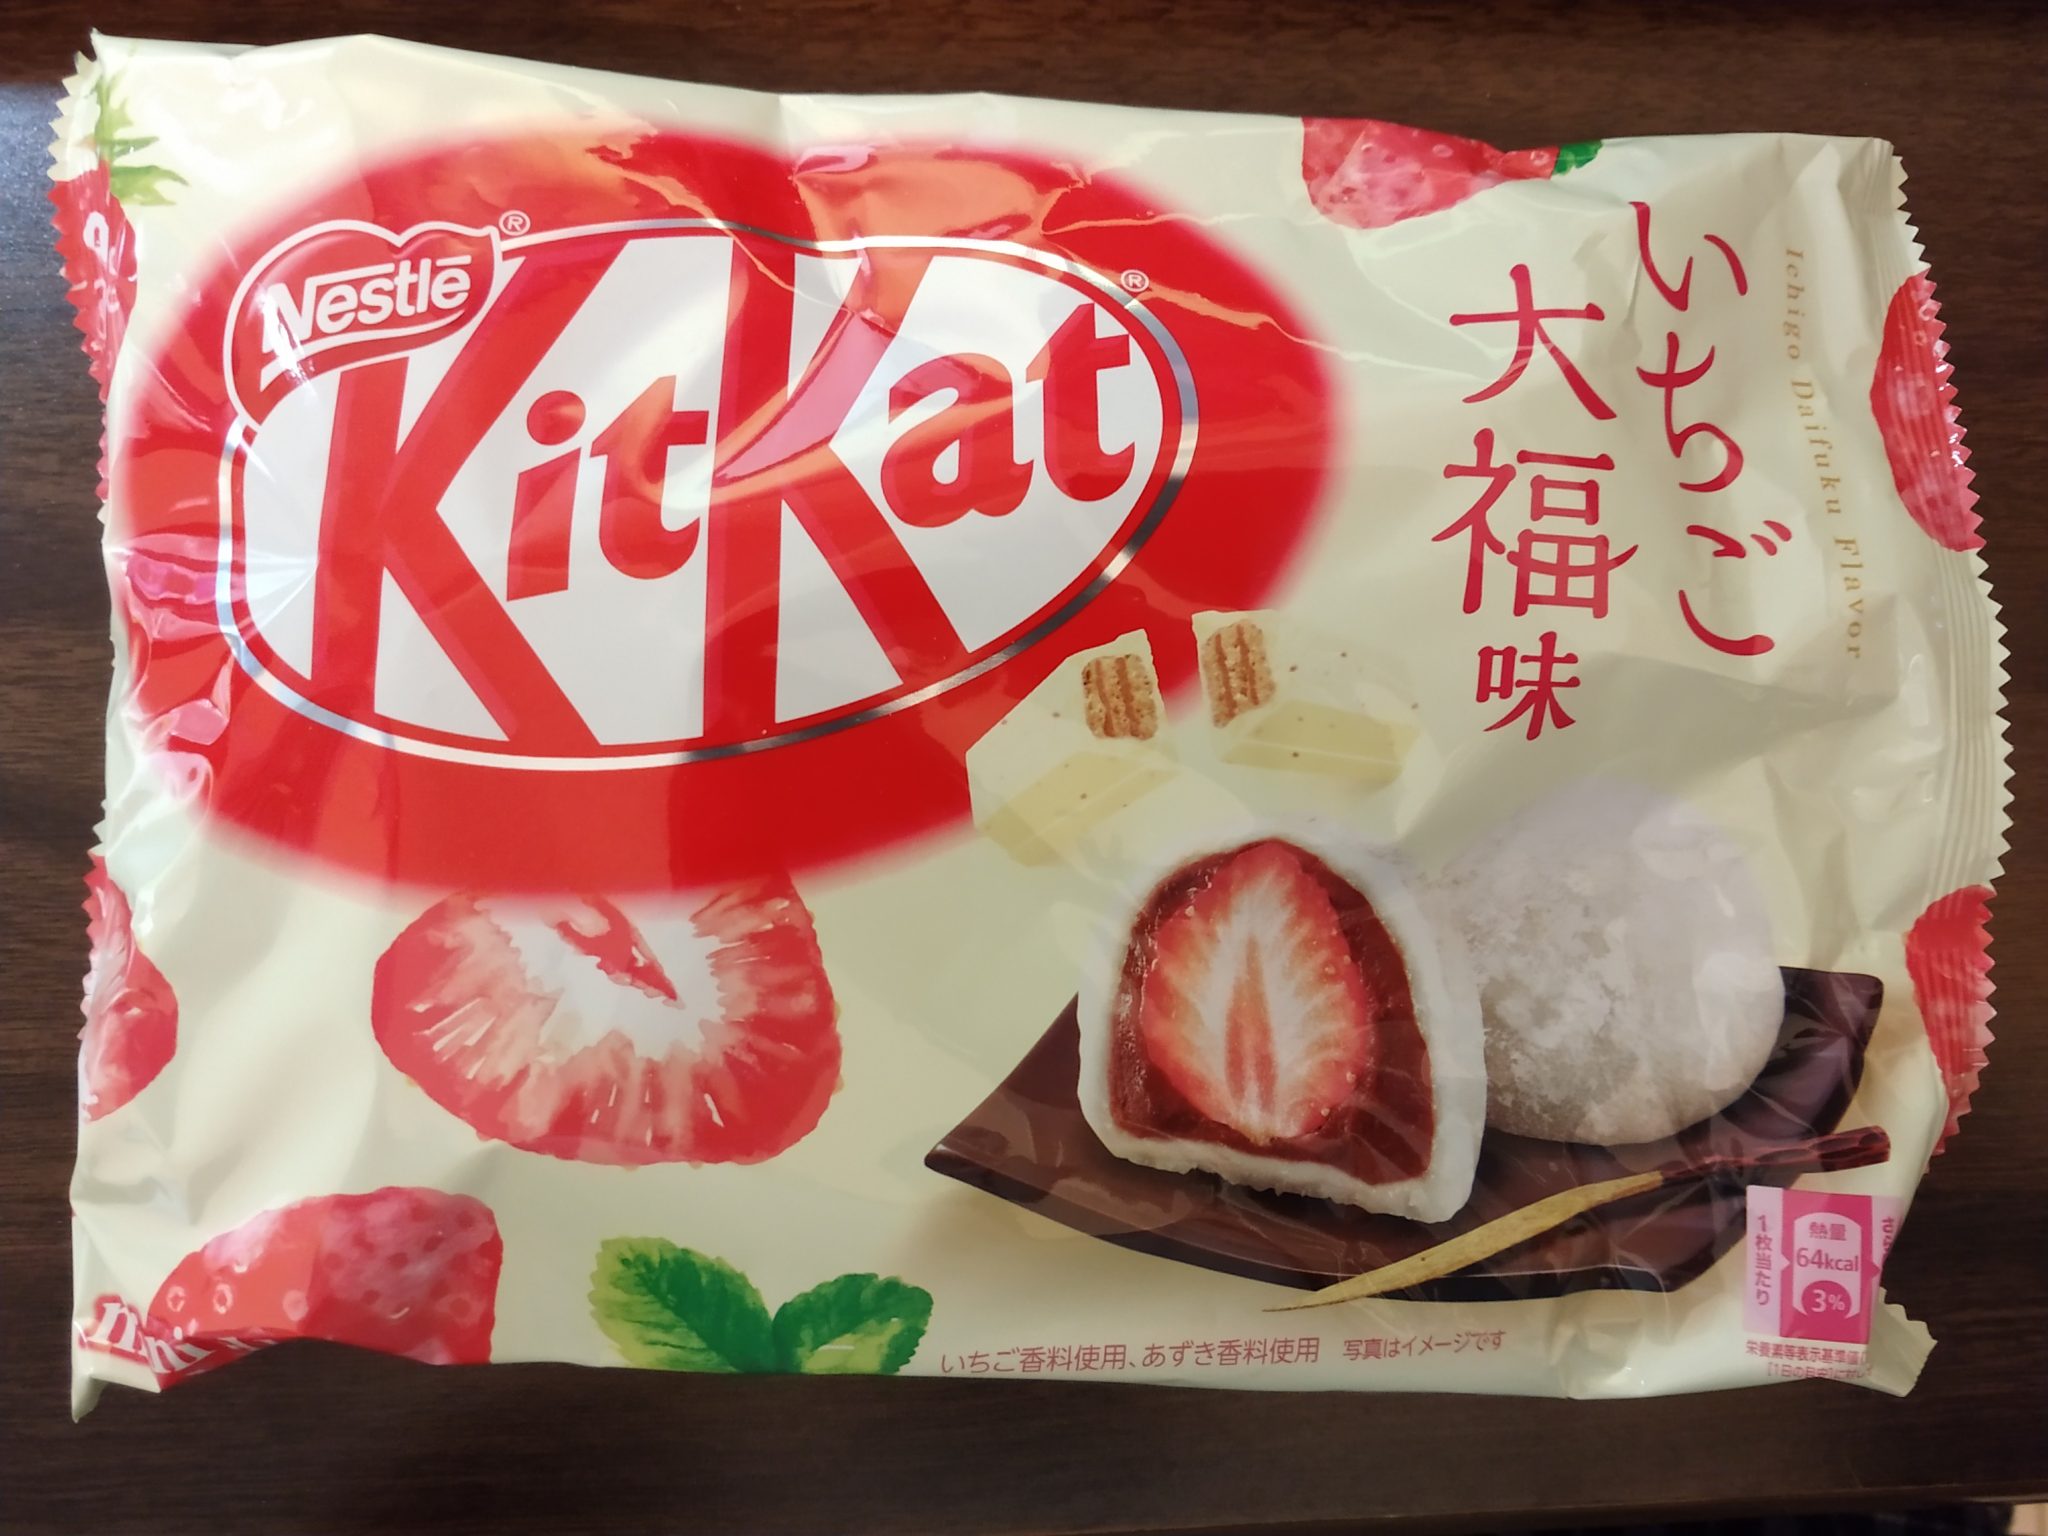 Kit Kat – Strawberry Daifuku